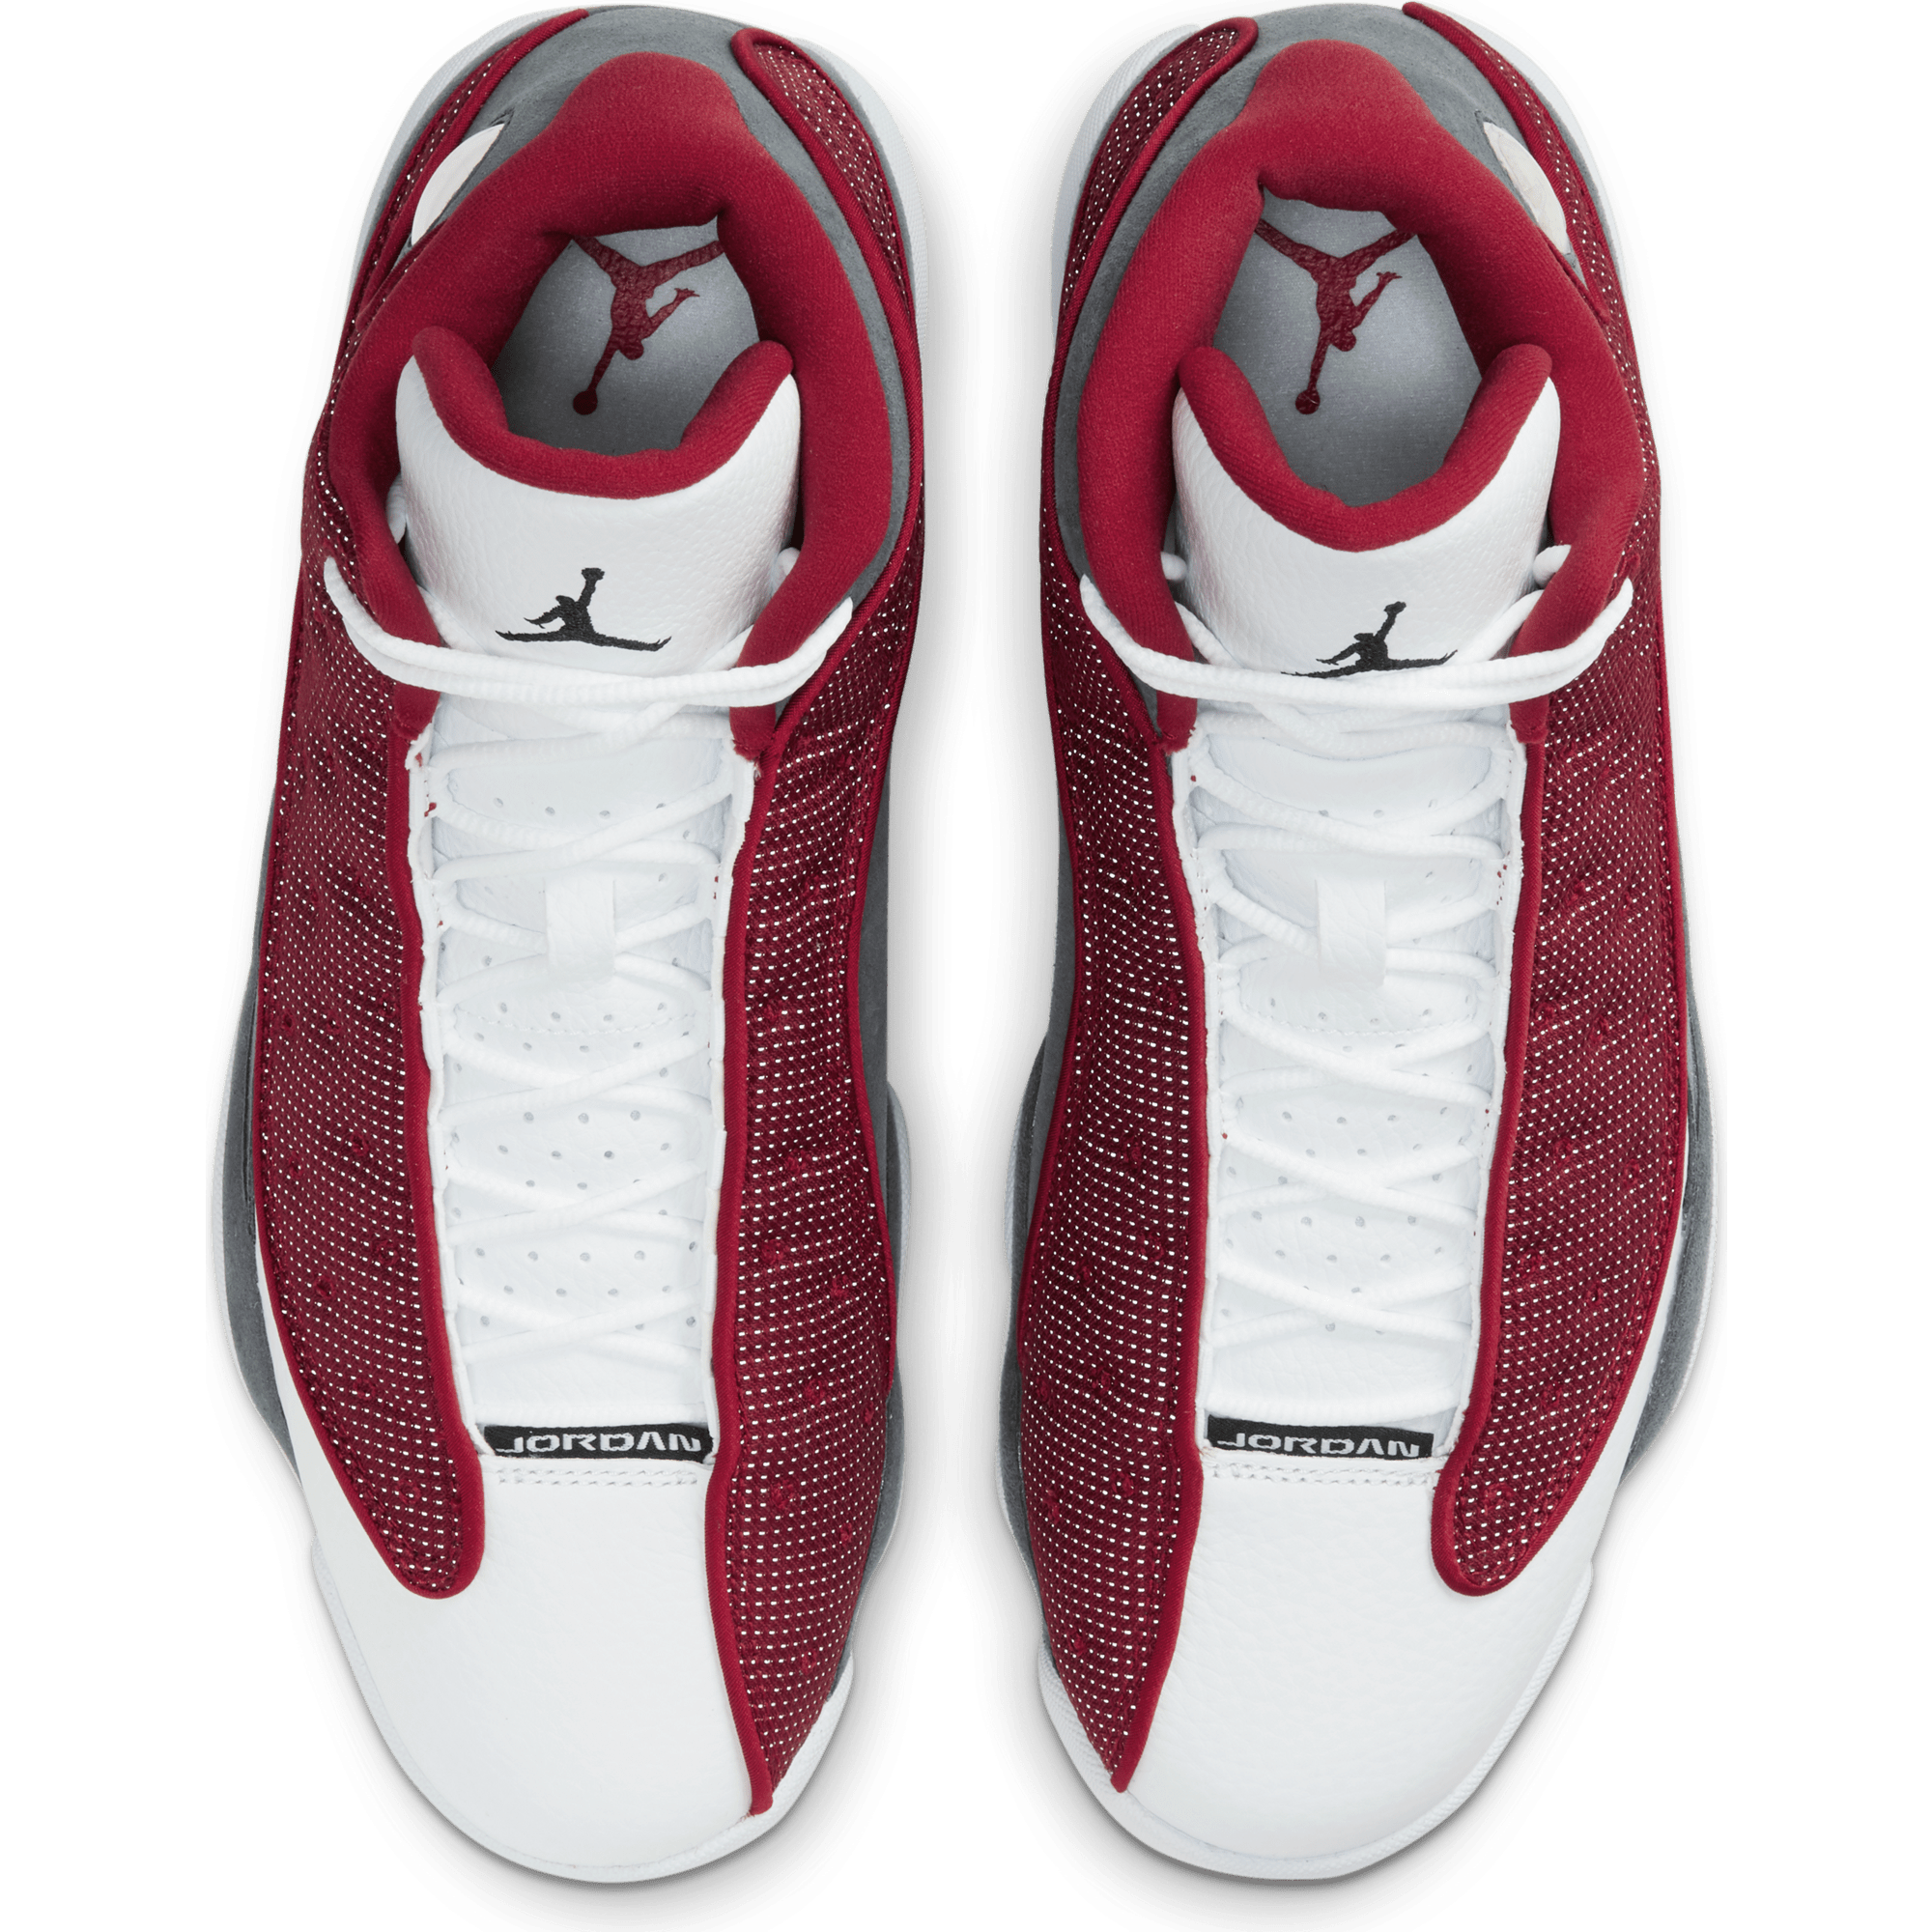 Air Jordan Footwear Air Jordan 13 Retro - Men's